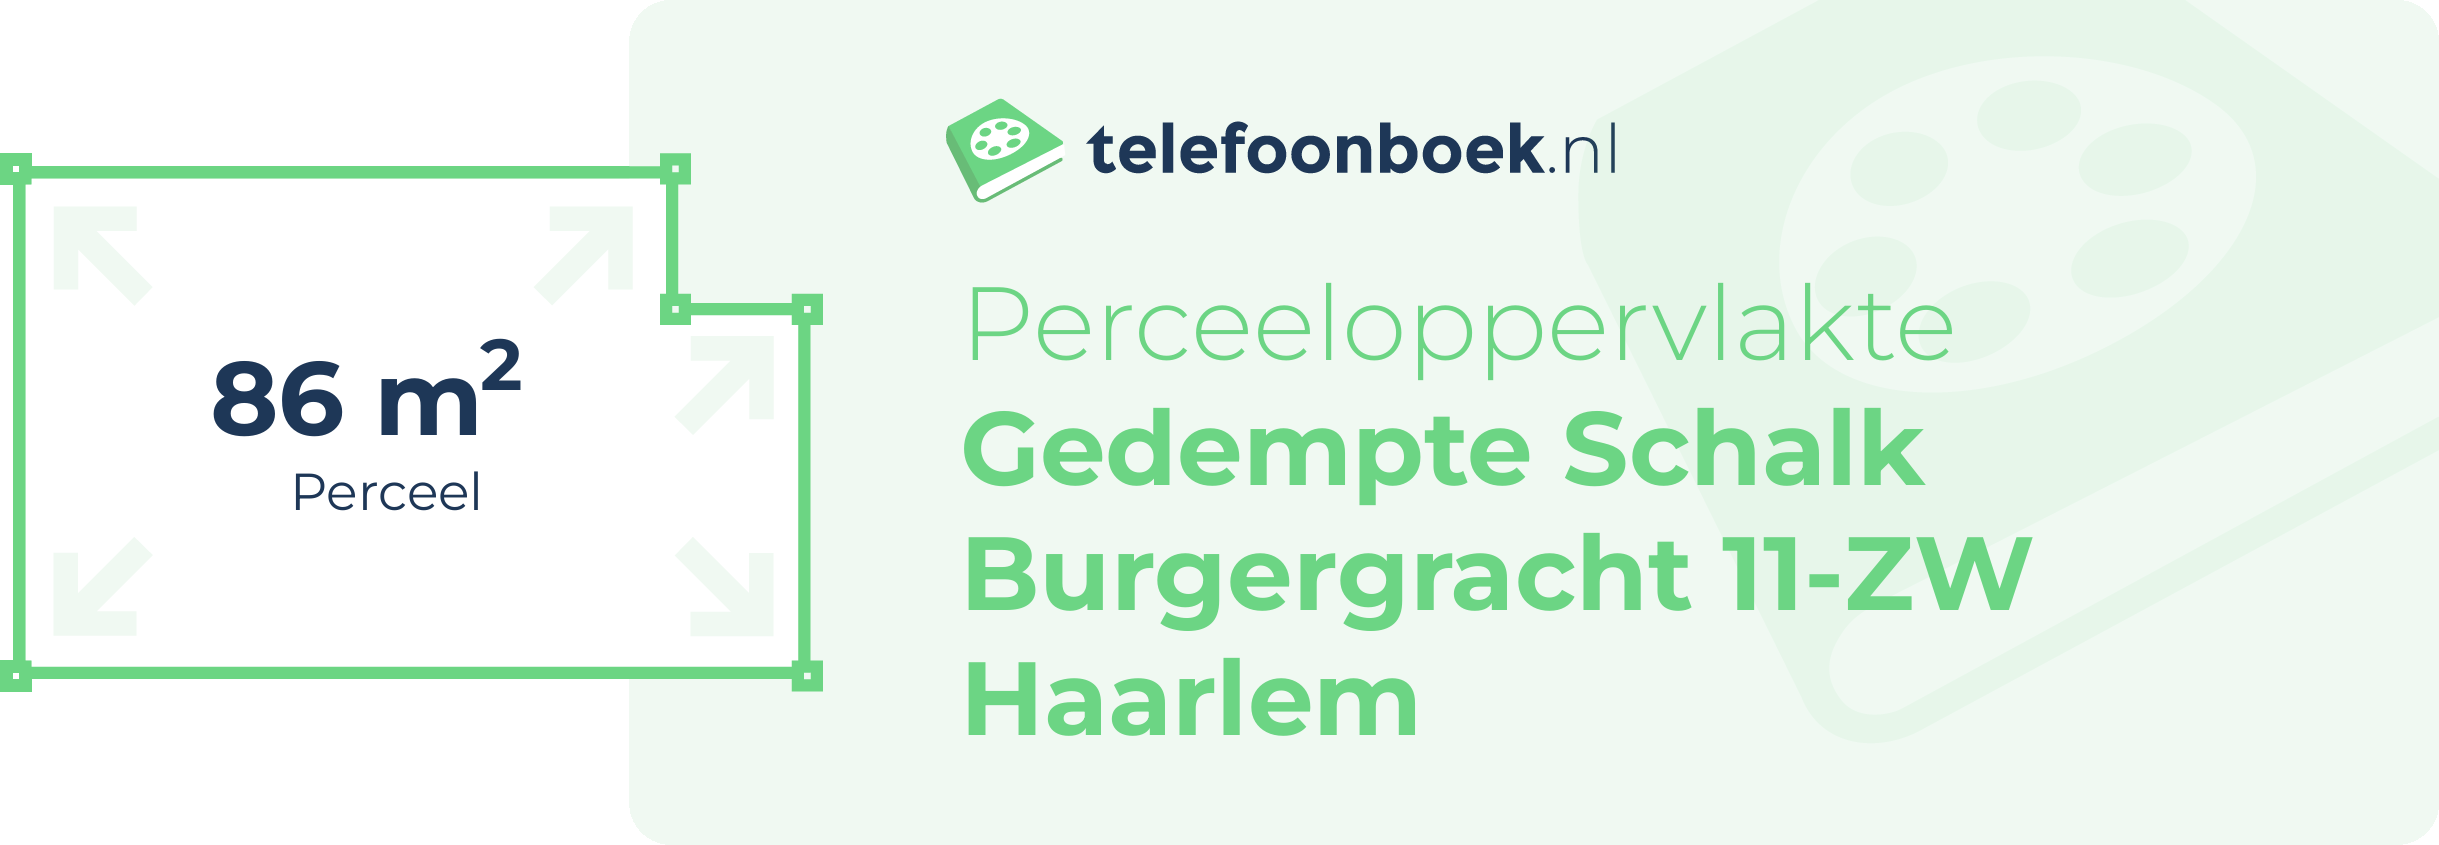 Perceeloppervlakte Gedempte Schalk Burgergracht 11-ZW Haarlem